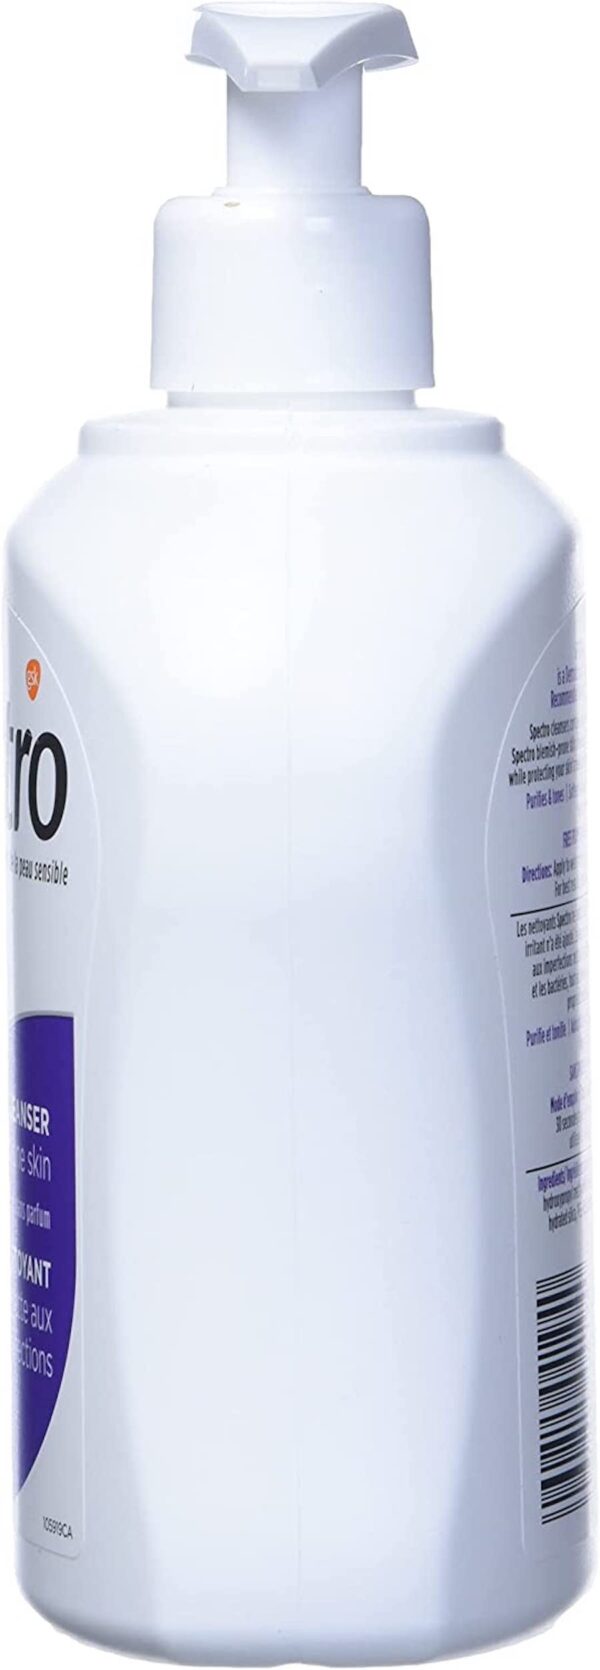 Spectro Jel Cleanser for Blemish Prone Skin (Fragrance Free) 500mL Pump